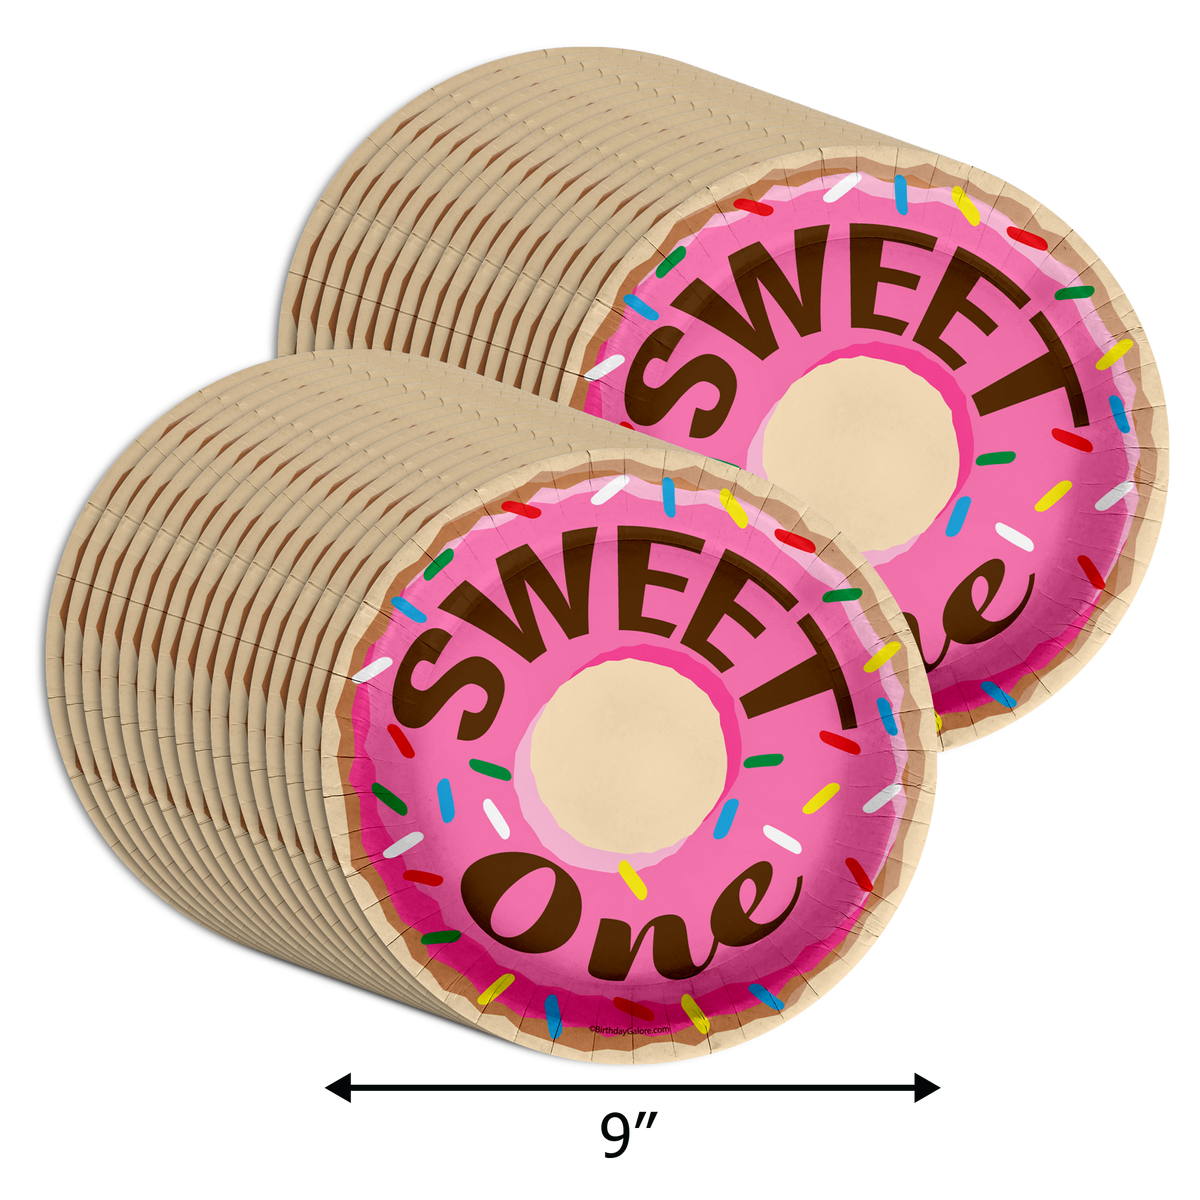 Girls 1st Birthday Party Supplies - Sweet One Donut Birthday Paper Plates - Large 9" Paper Plates in Bulk 32 Piece